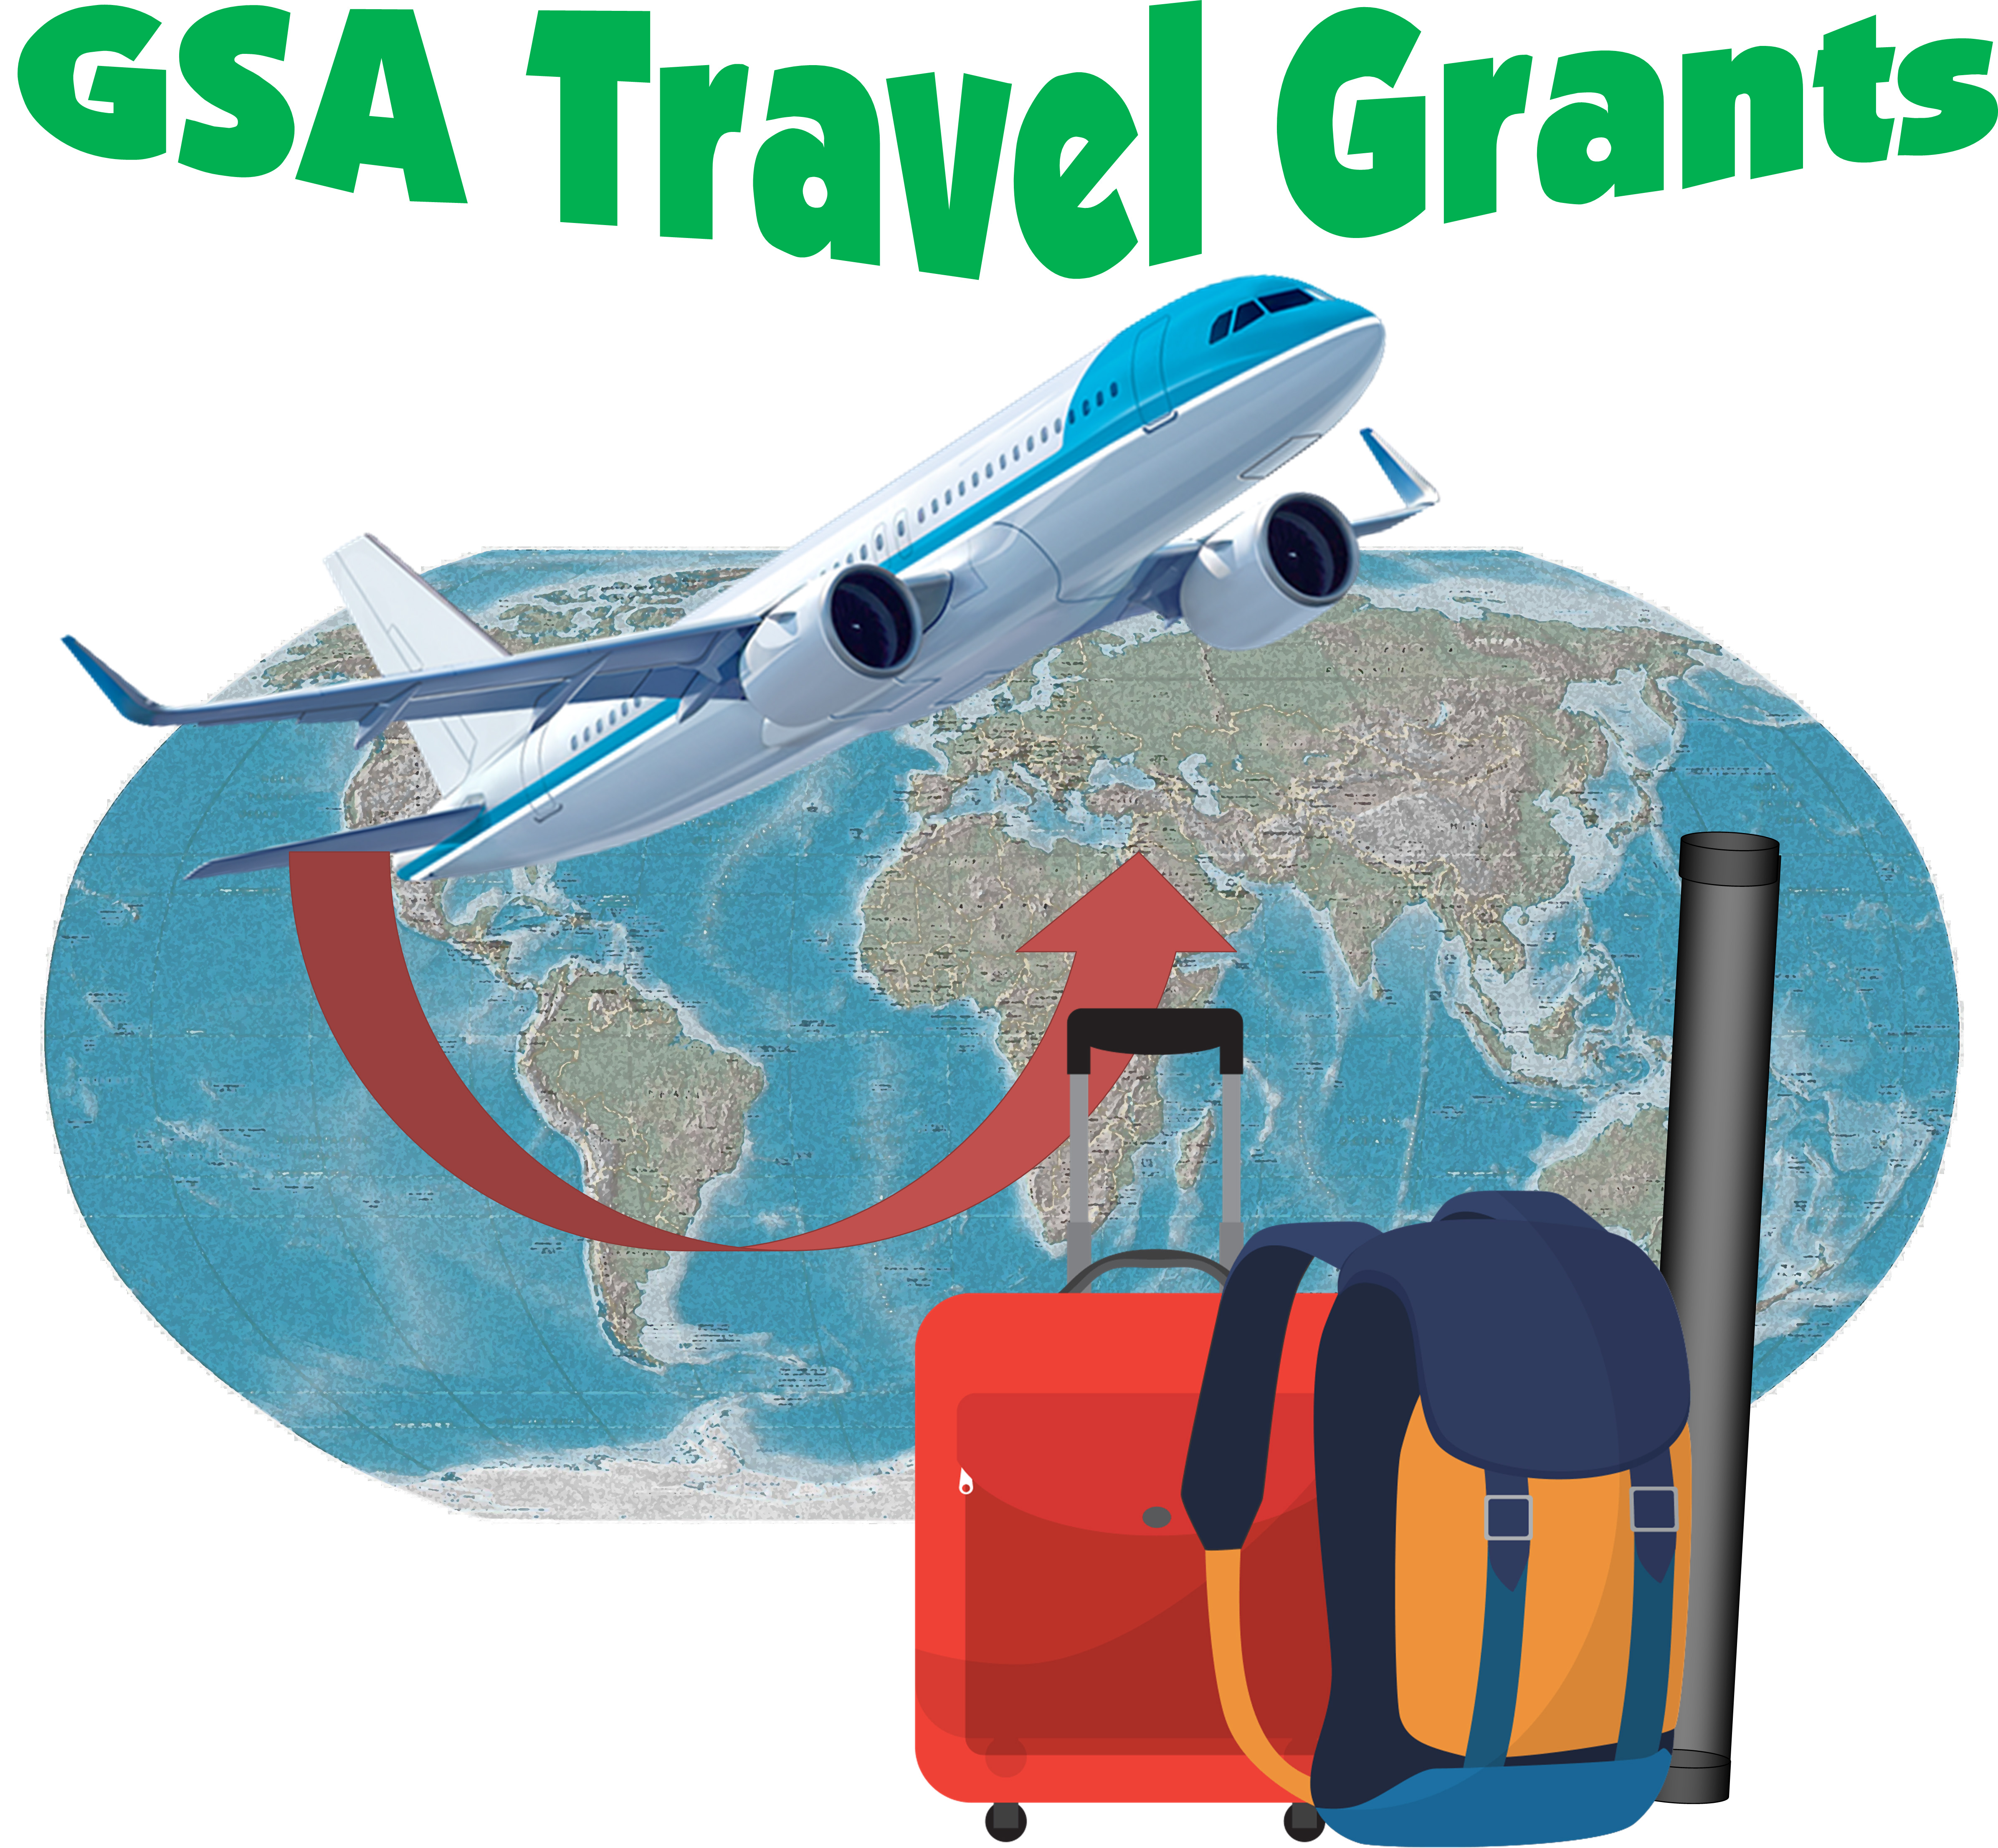 travel grant